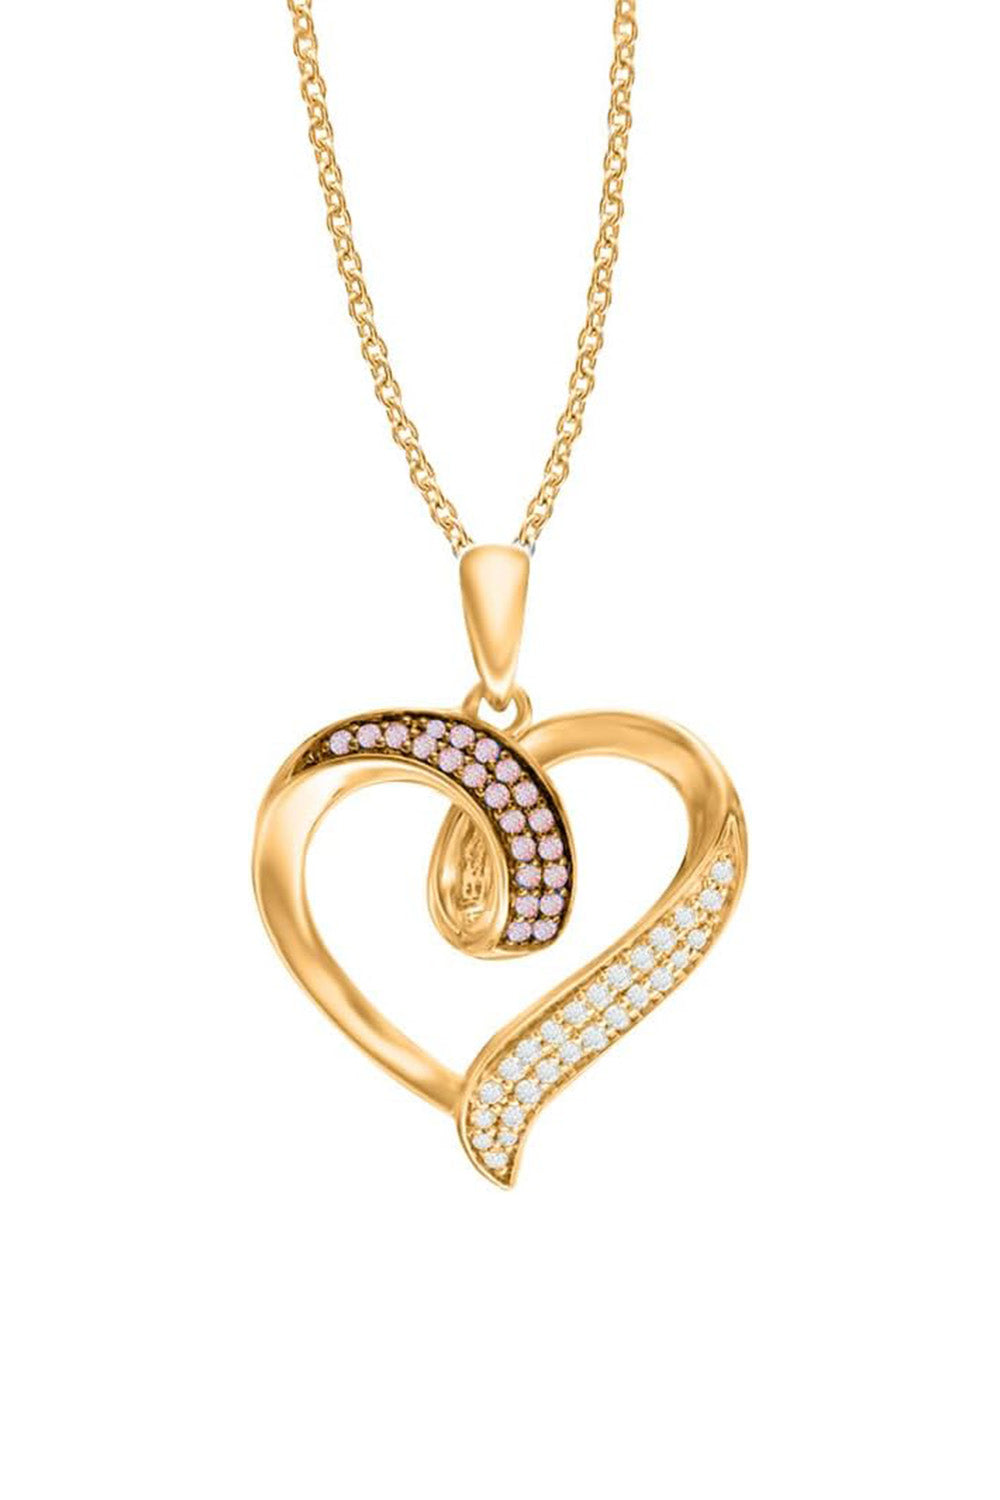 Yellow Gold Color Love Heart Pendant Necklace, Pendant For Women